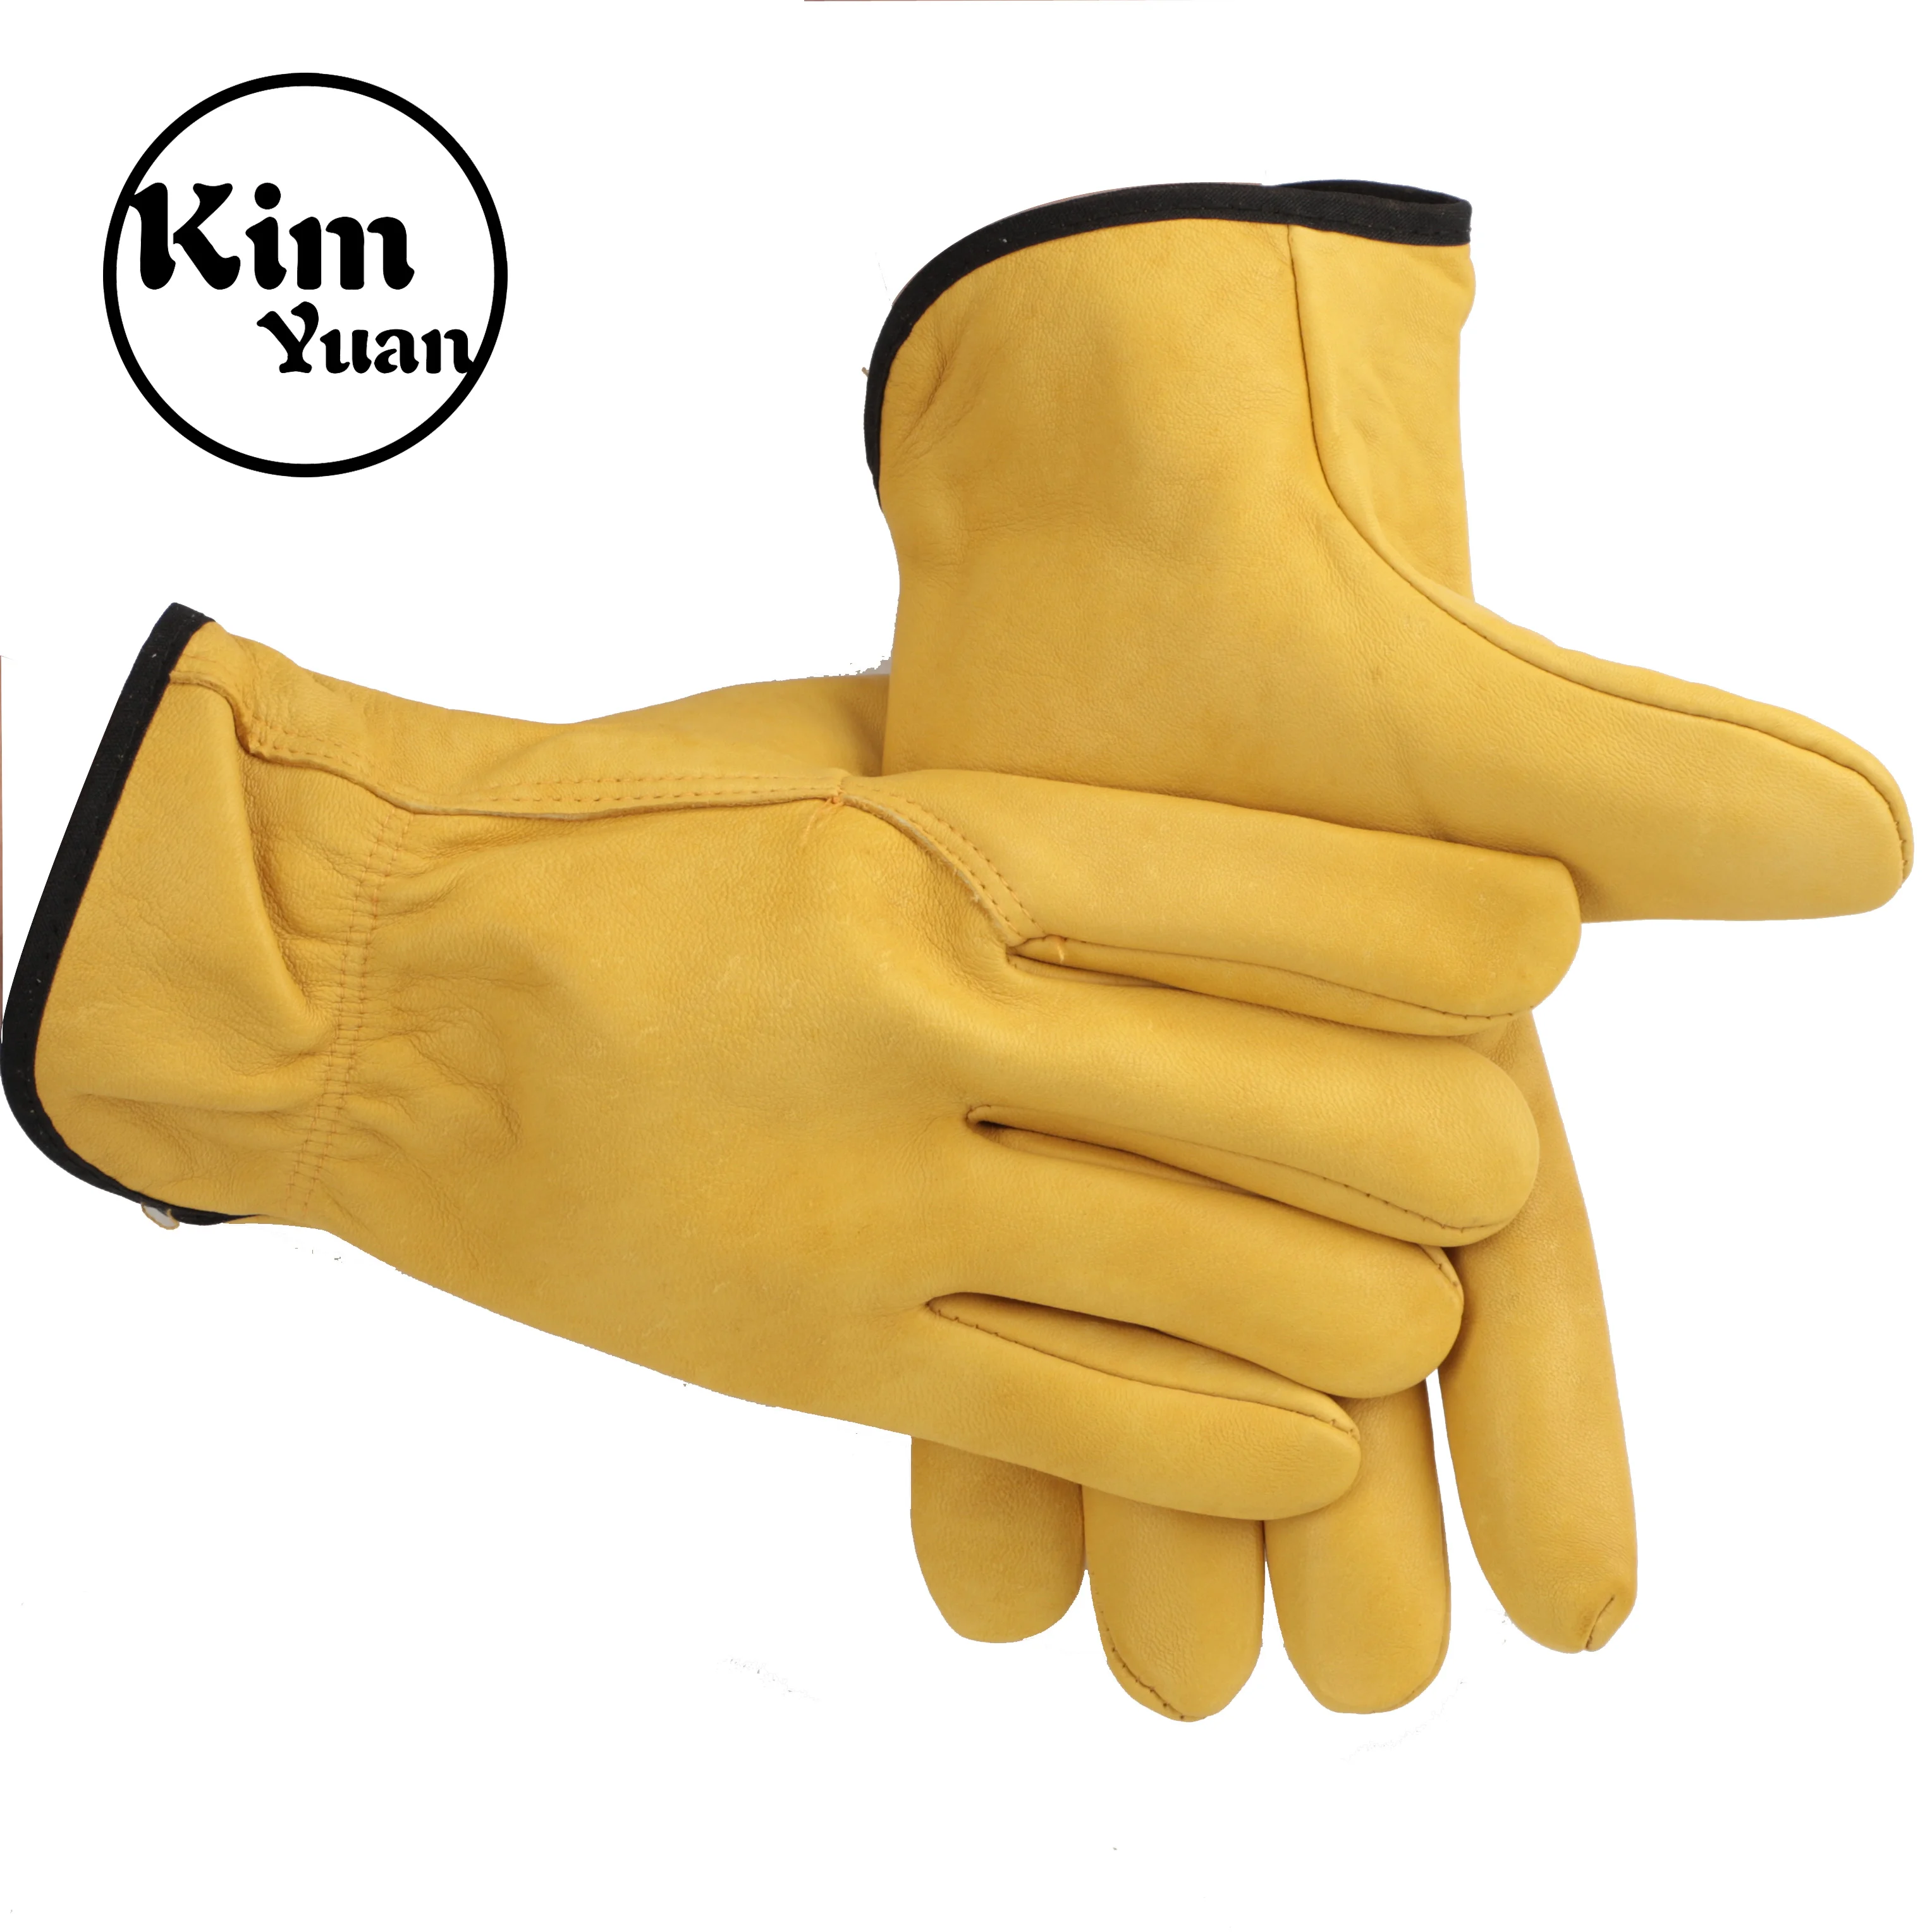 

KIM YUAN Work gloves, labor warranty, car handling, gardening and garden stab-resistant gloves